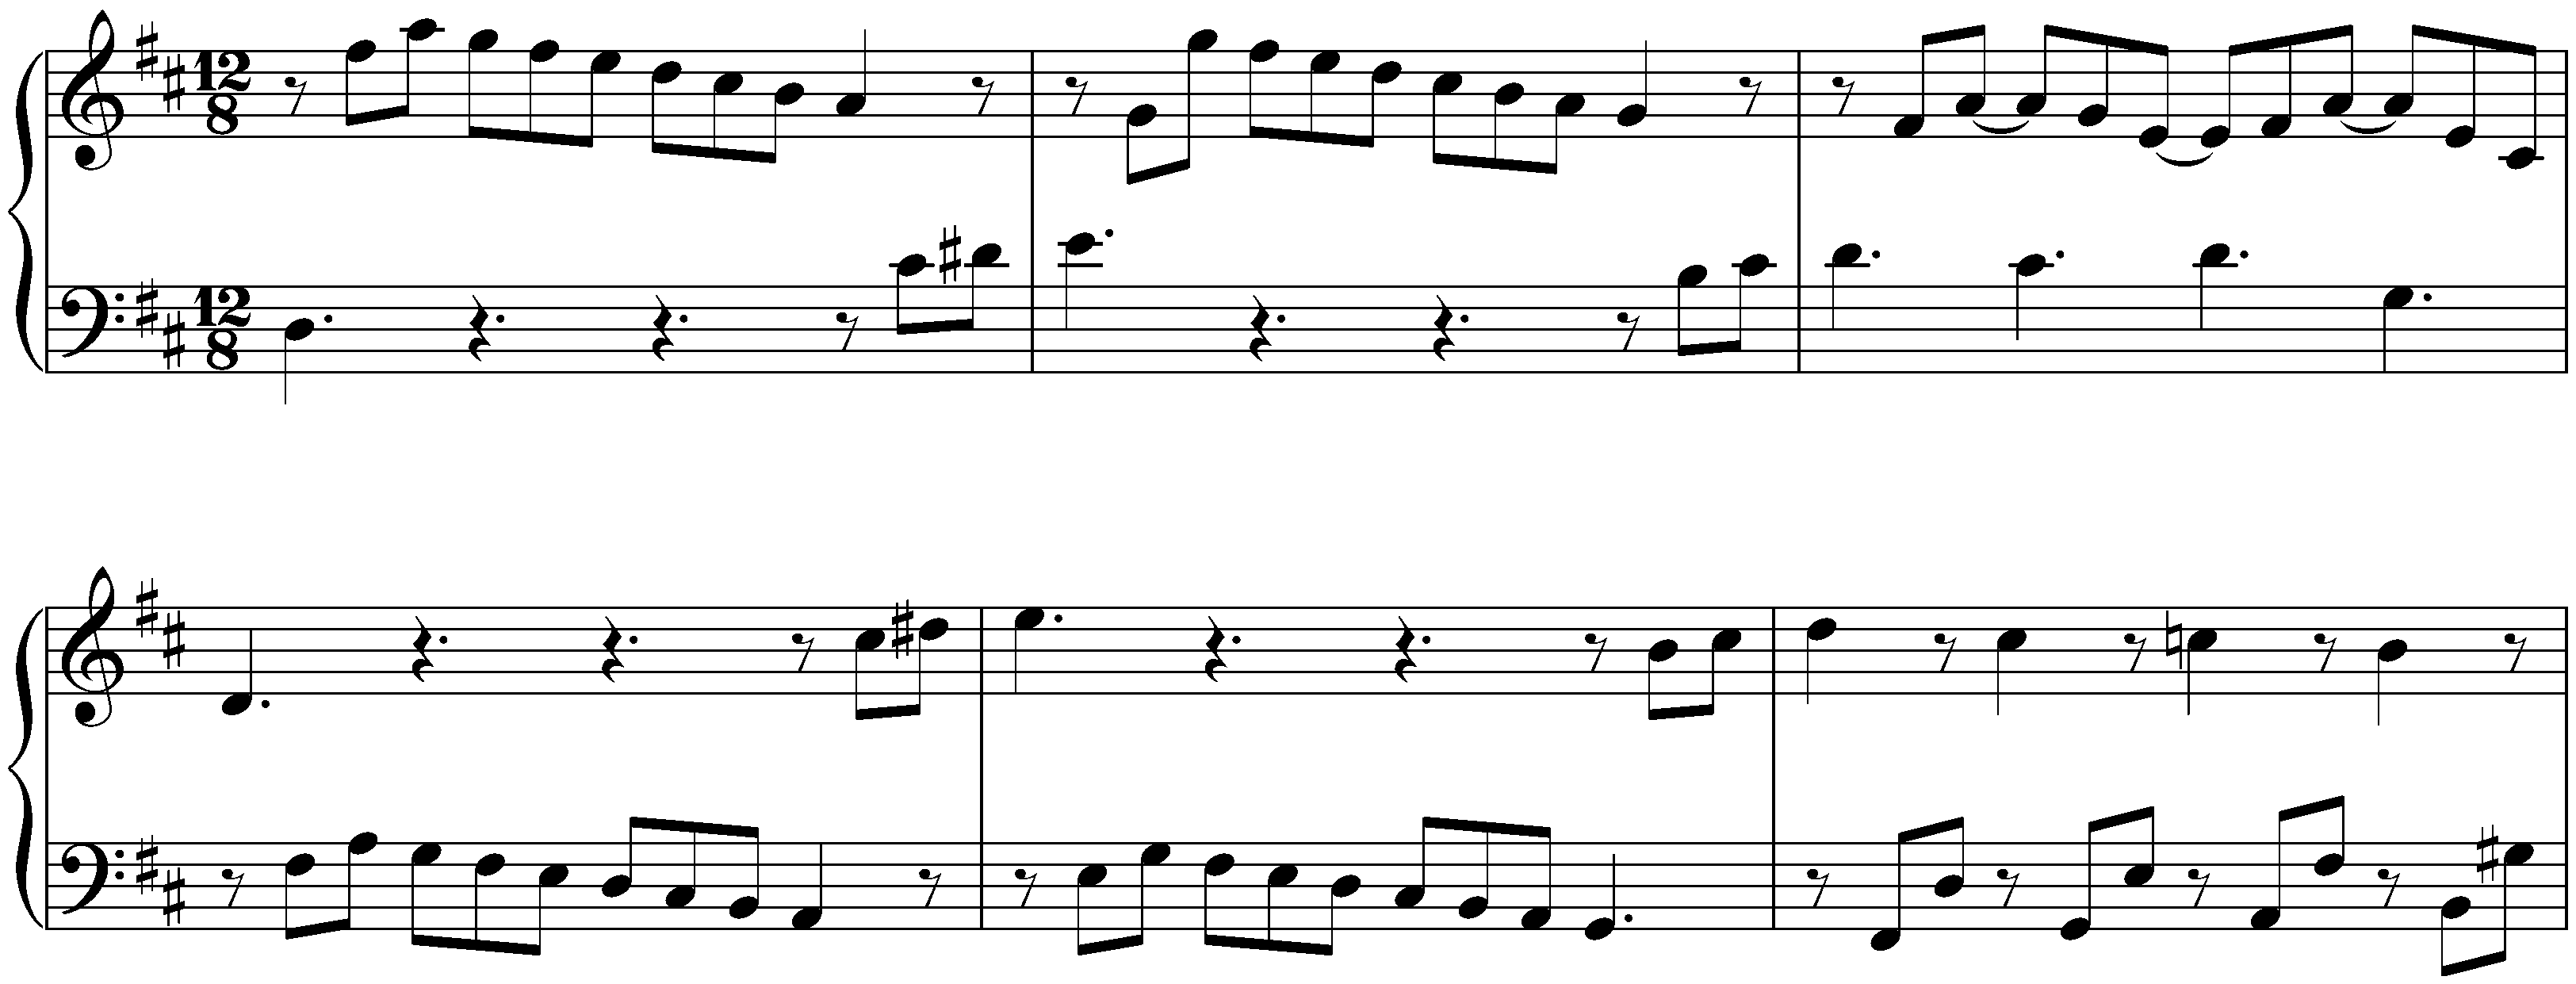 Sonatas found in Madrid; 1. D major